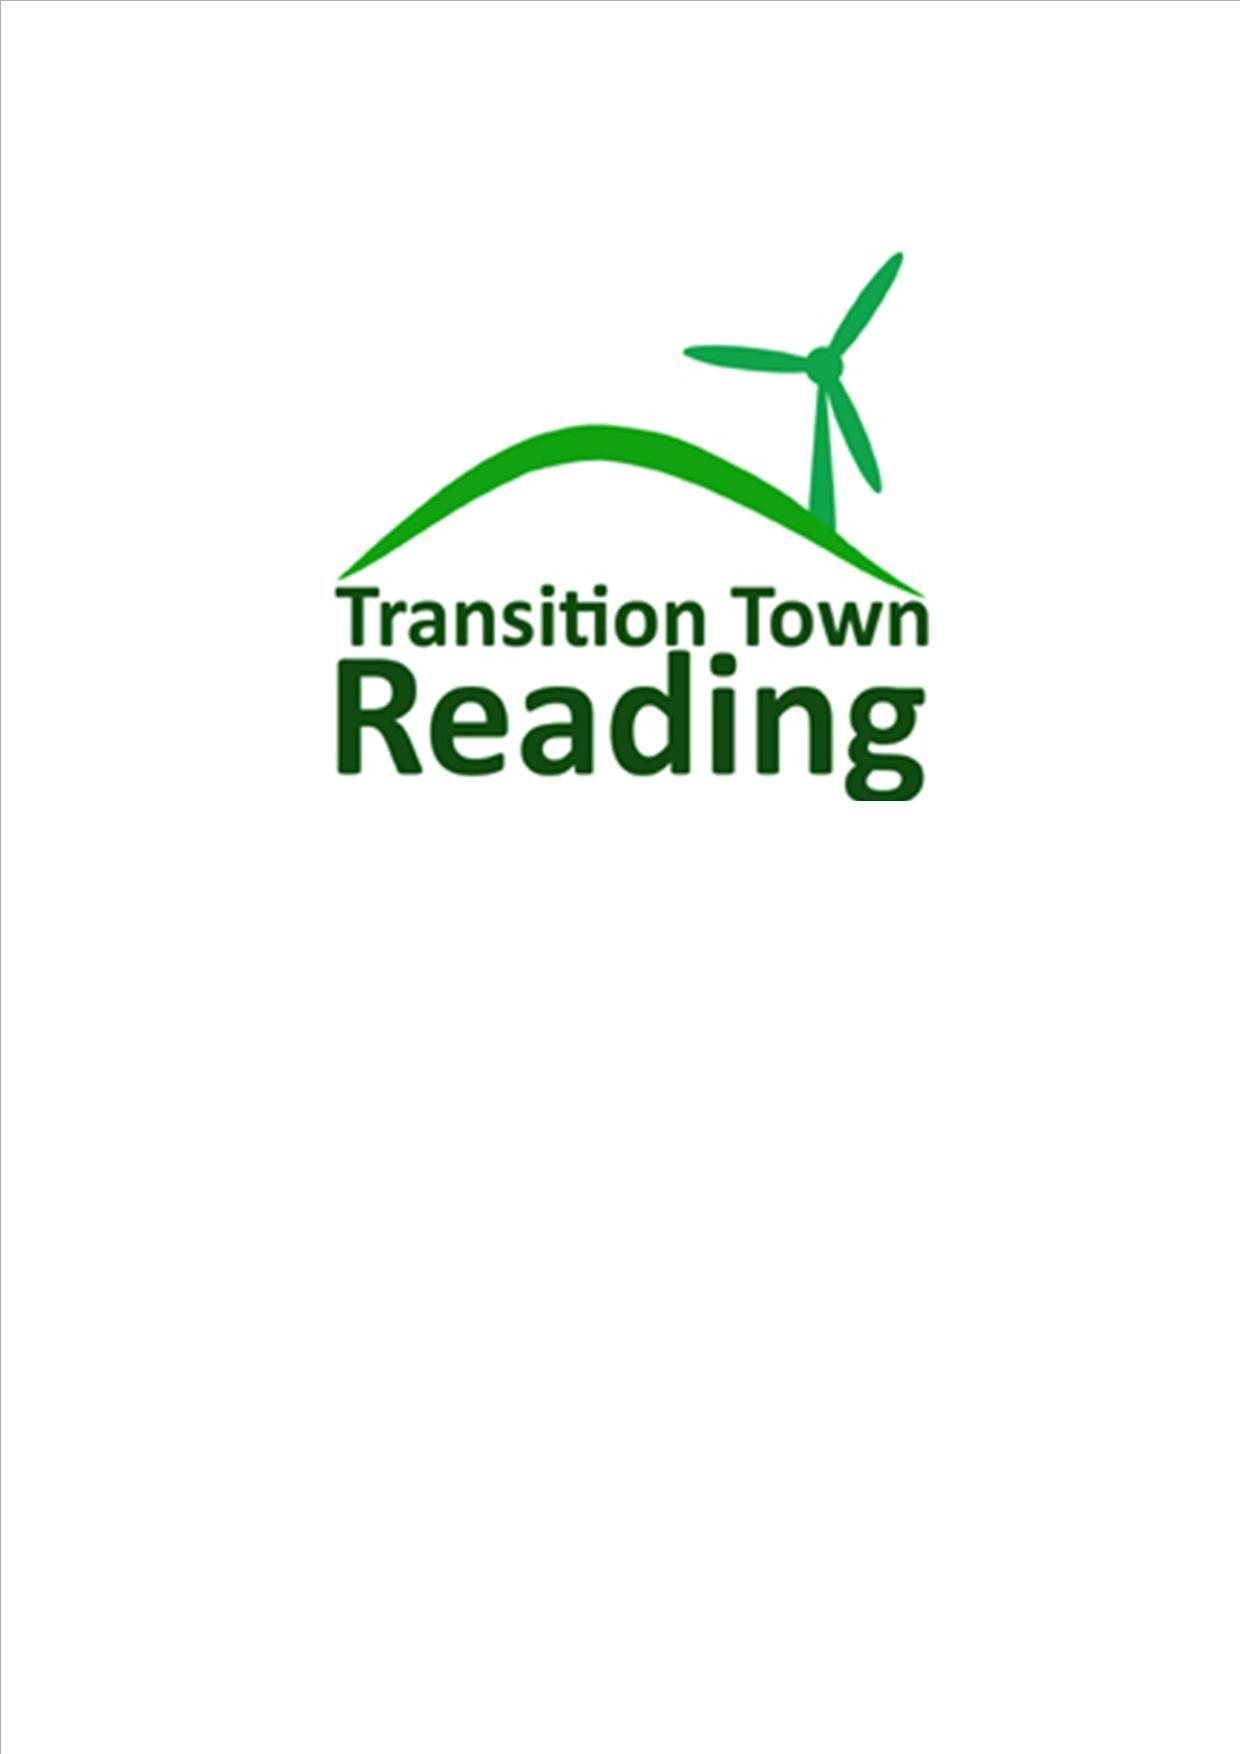 TTR Logo - TTR logo